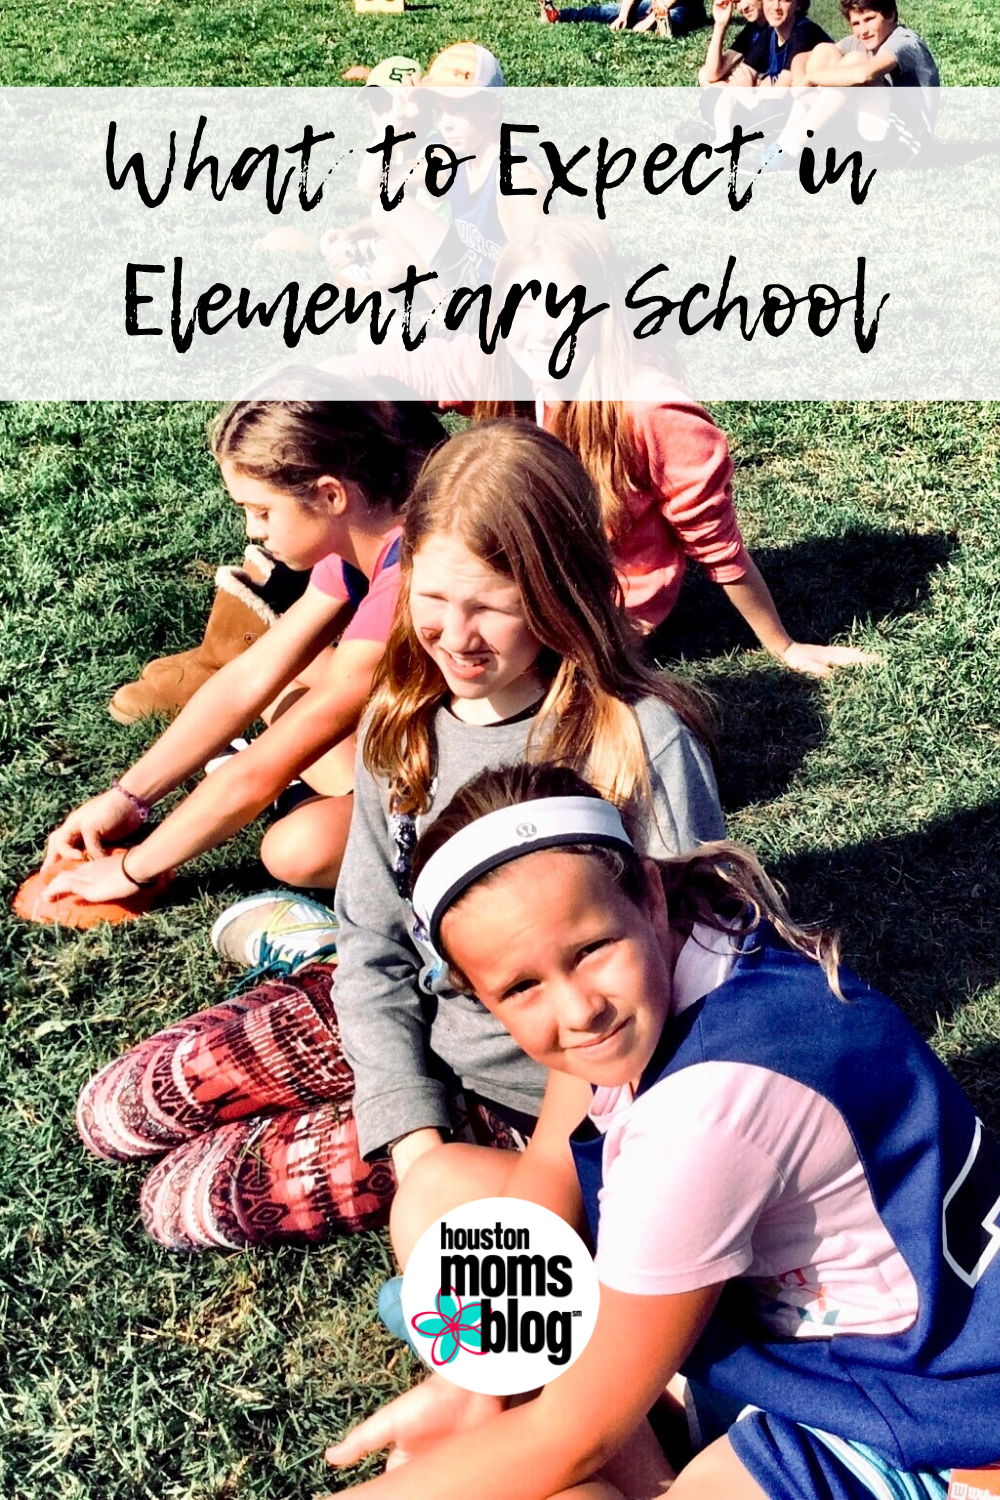 Houston Moms Blog "What to Expect in Elementary School" #houstonmomsblog #momsaroundhouston